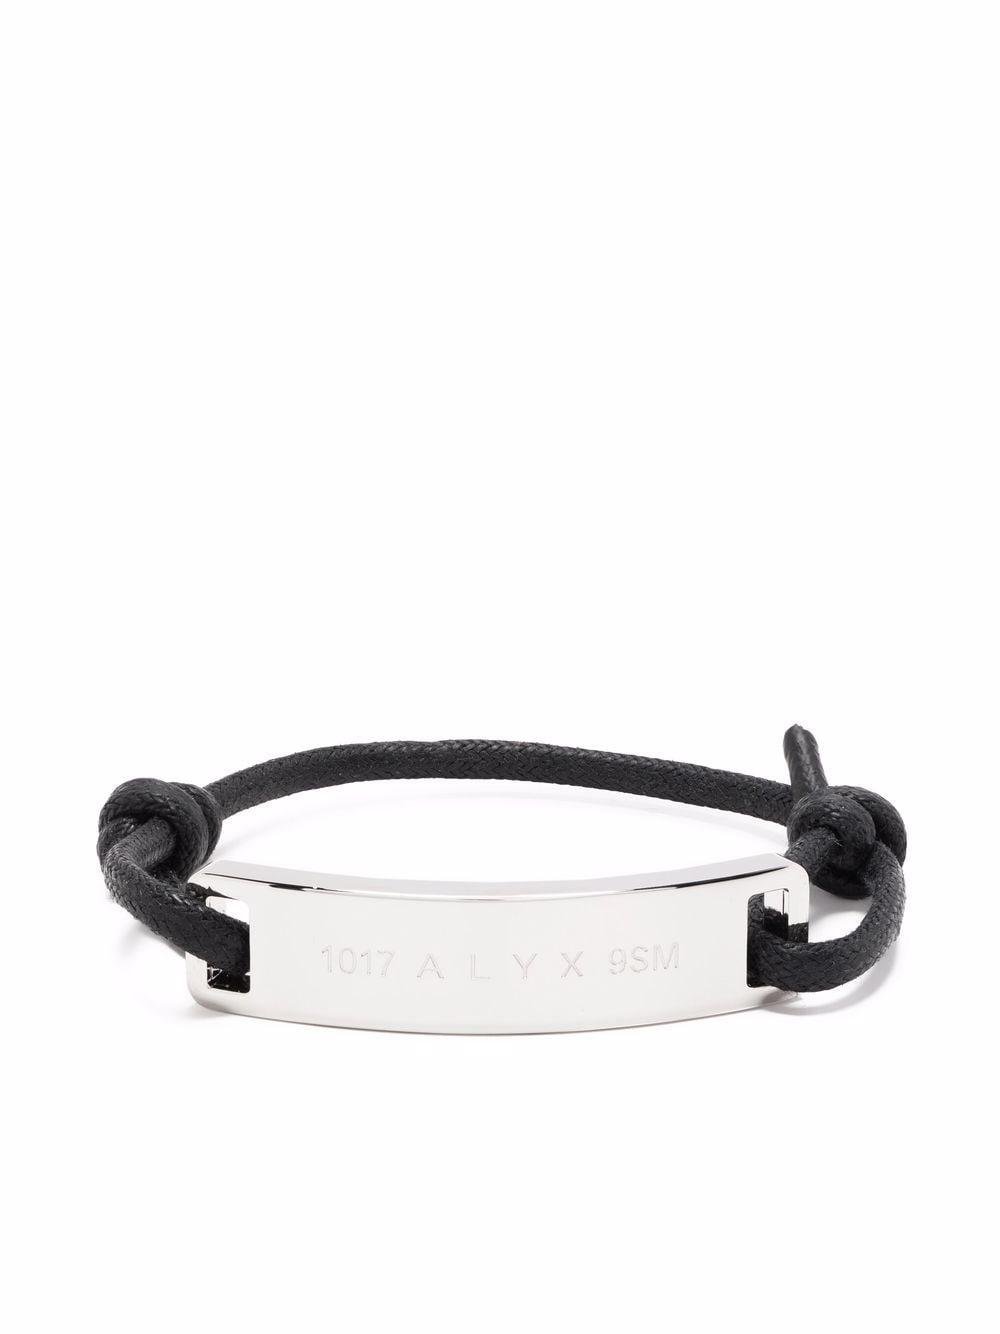 Alyx Men's Logo-Plaque Rope Bracelet (Black/Silver) by ALYX